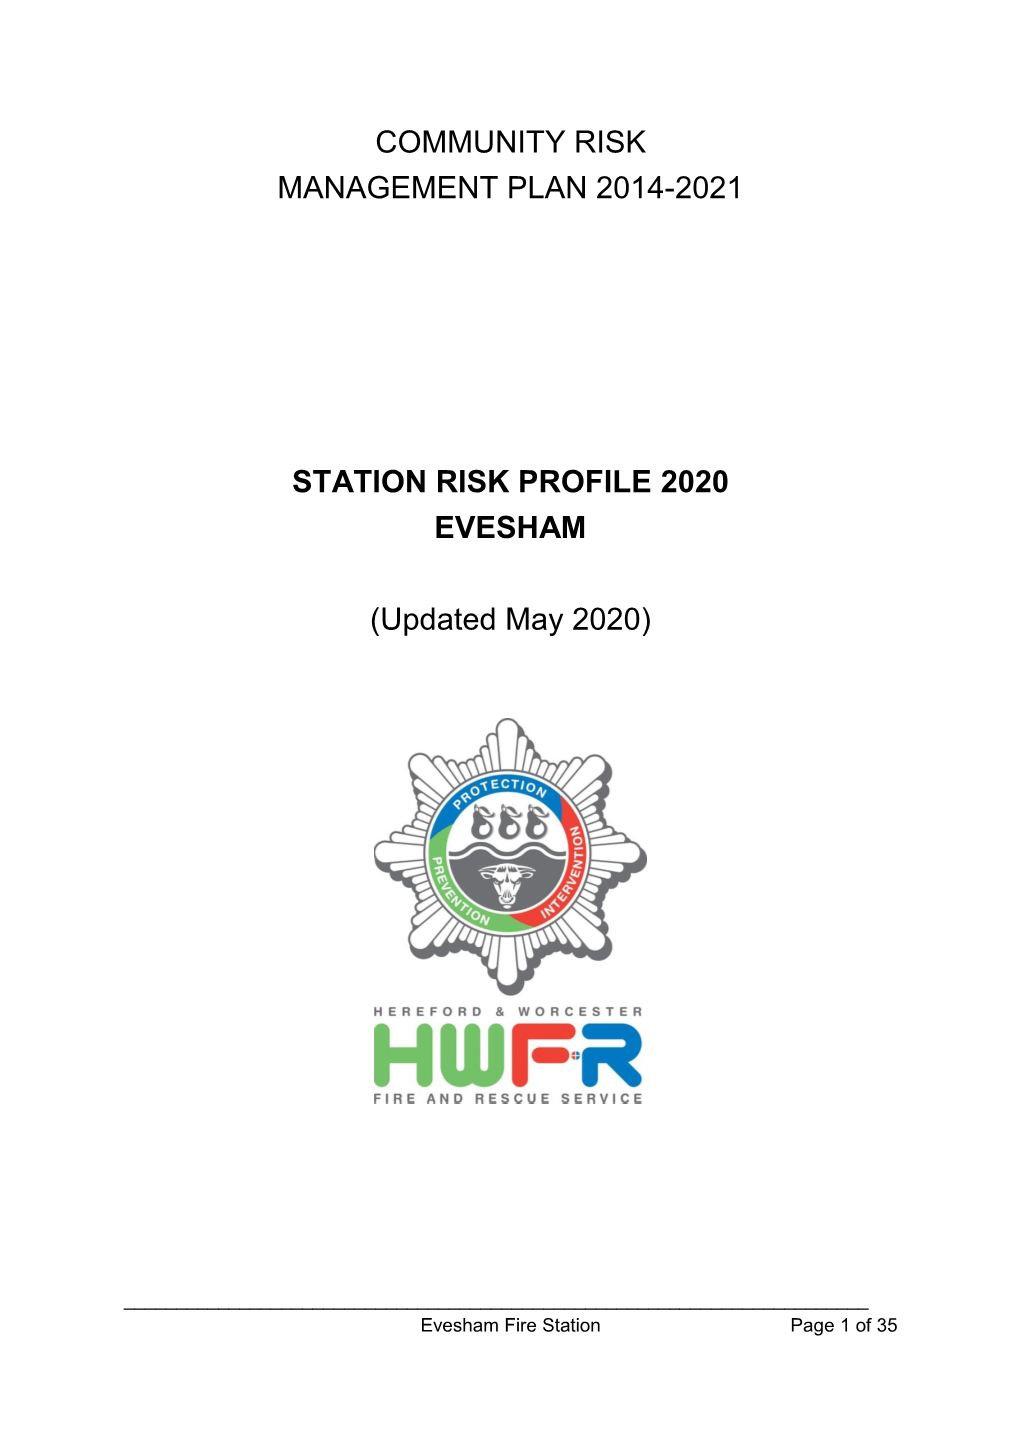 Evesham Station Risk Profile